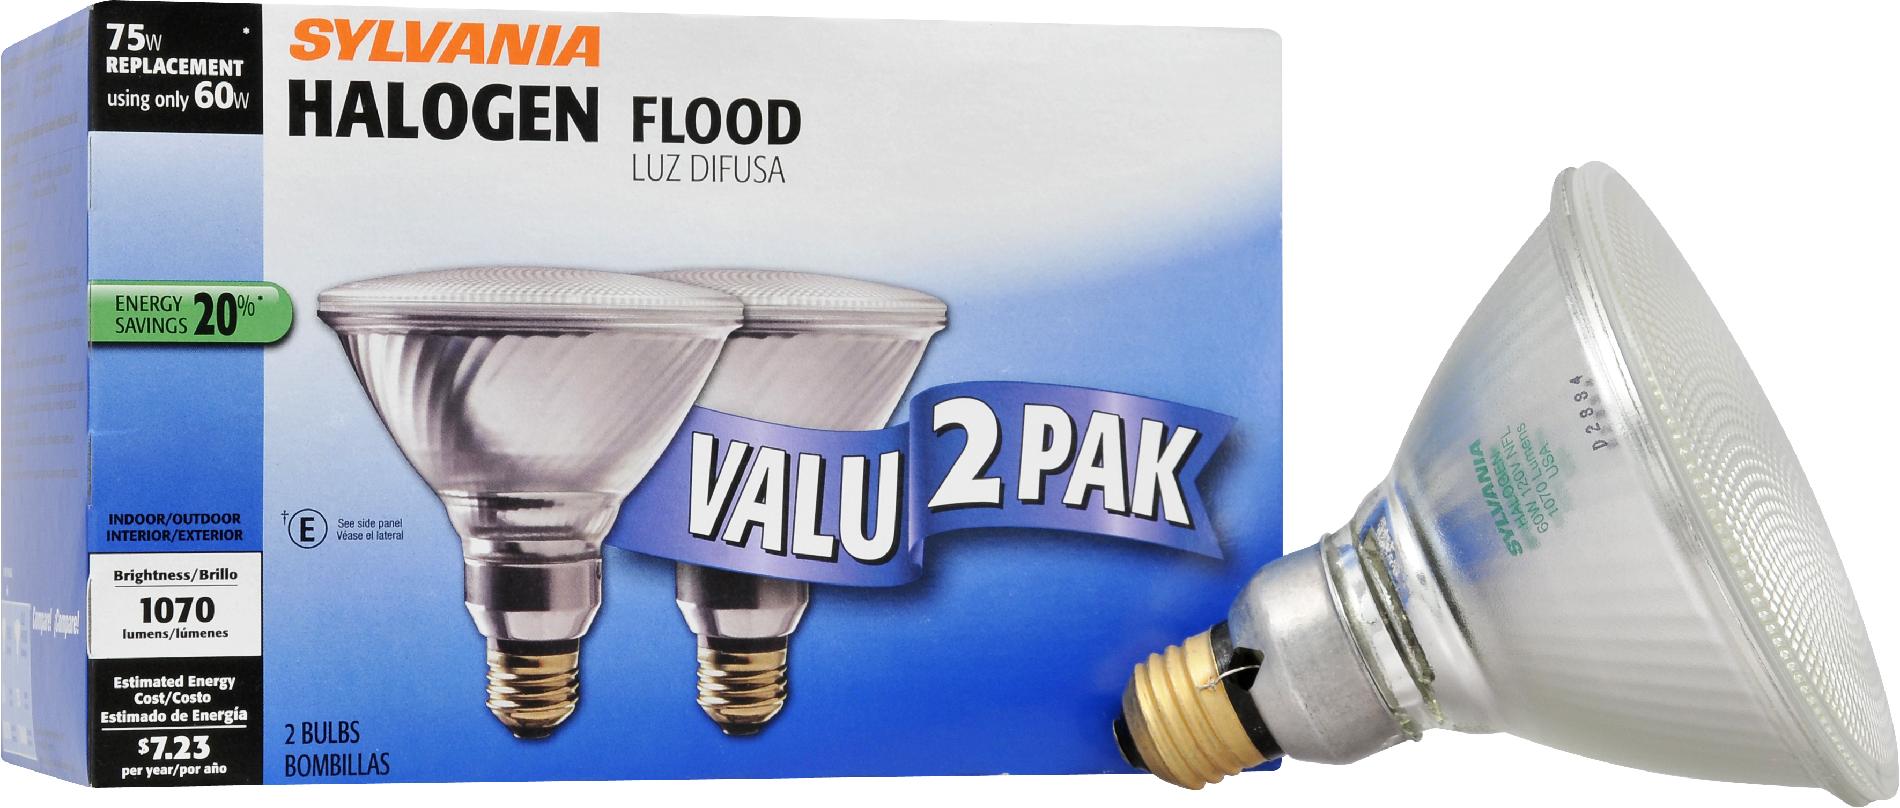 Sylvania Halogen Narrow Flood Lamp PAR38-Medium Base 120V Light Bulb 60W Equivalent 85W - 2 Pack